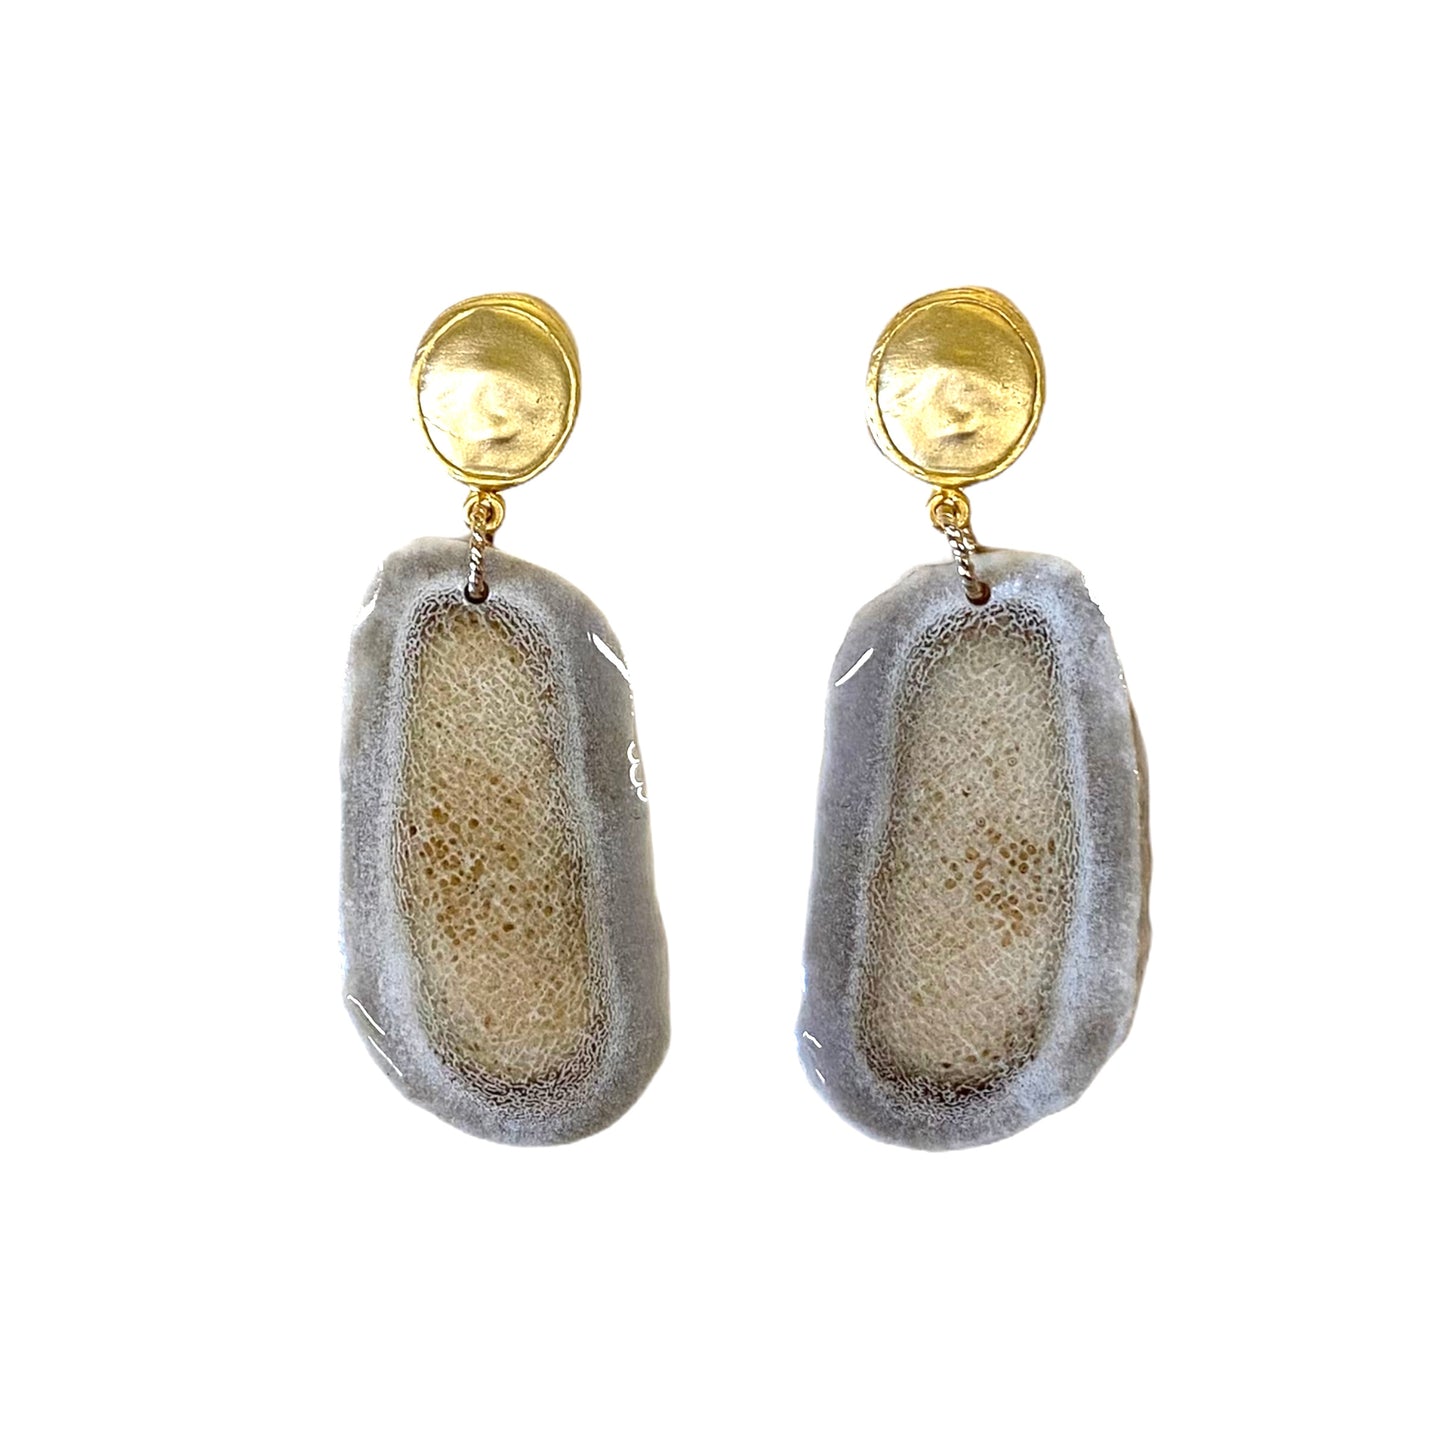 Antler Earrings with Stones